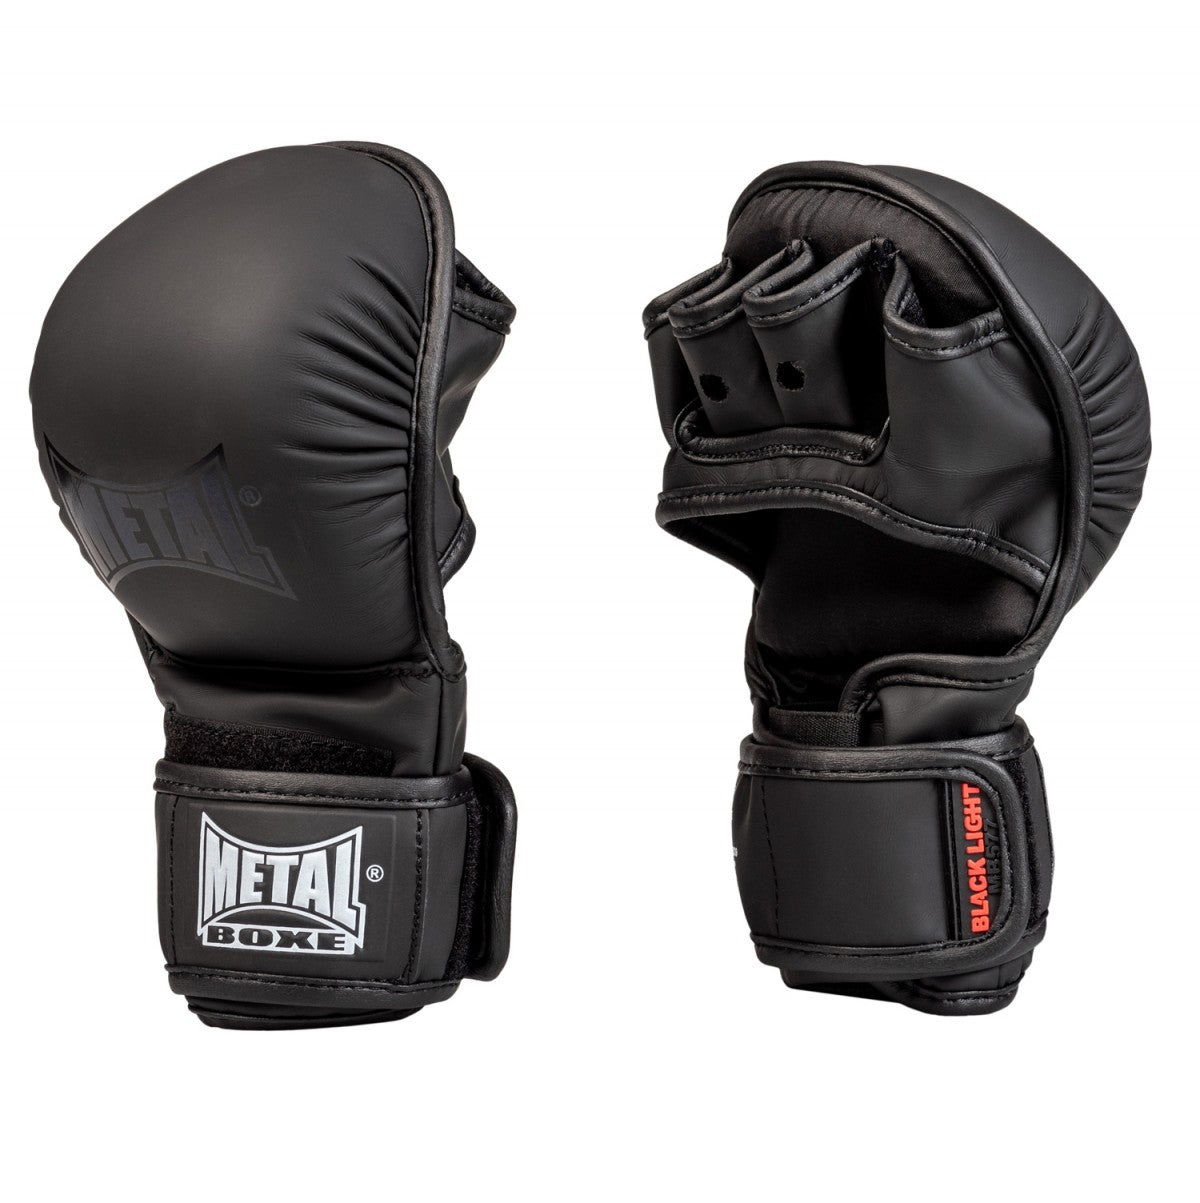 MMA-Handschuhe Metal Boxe - Schwarz